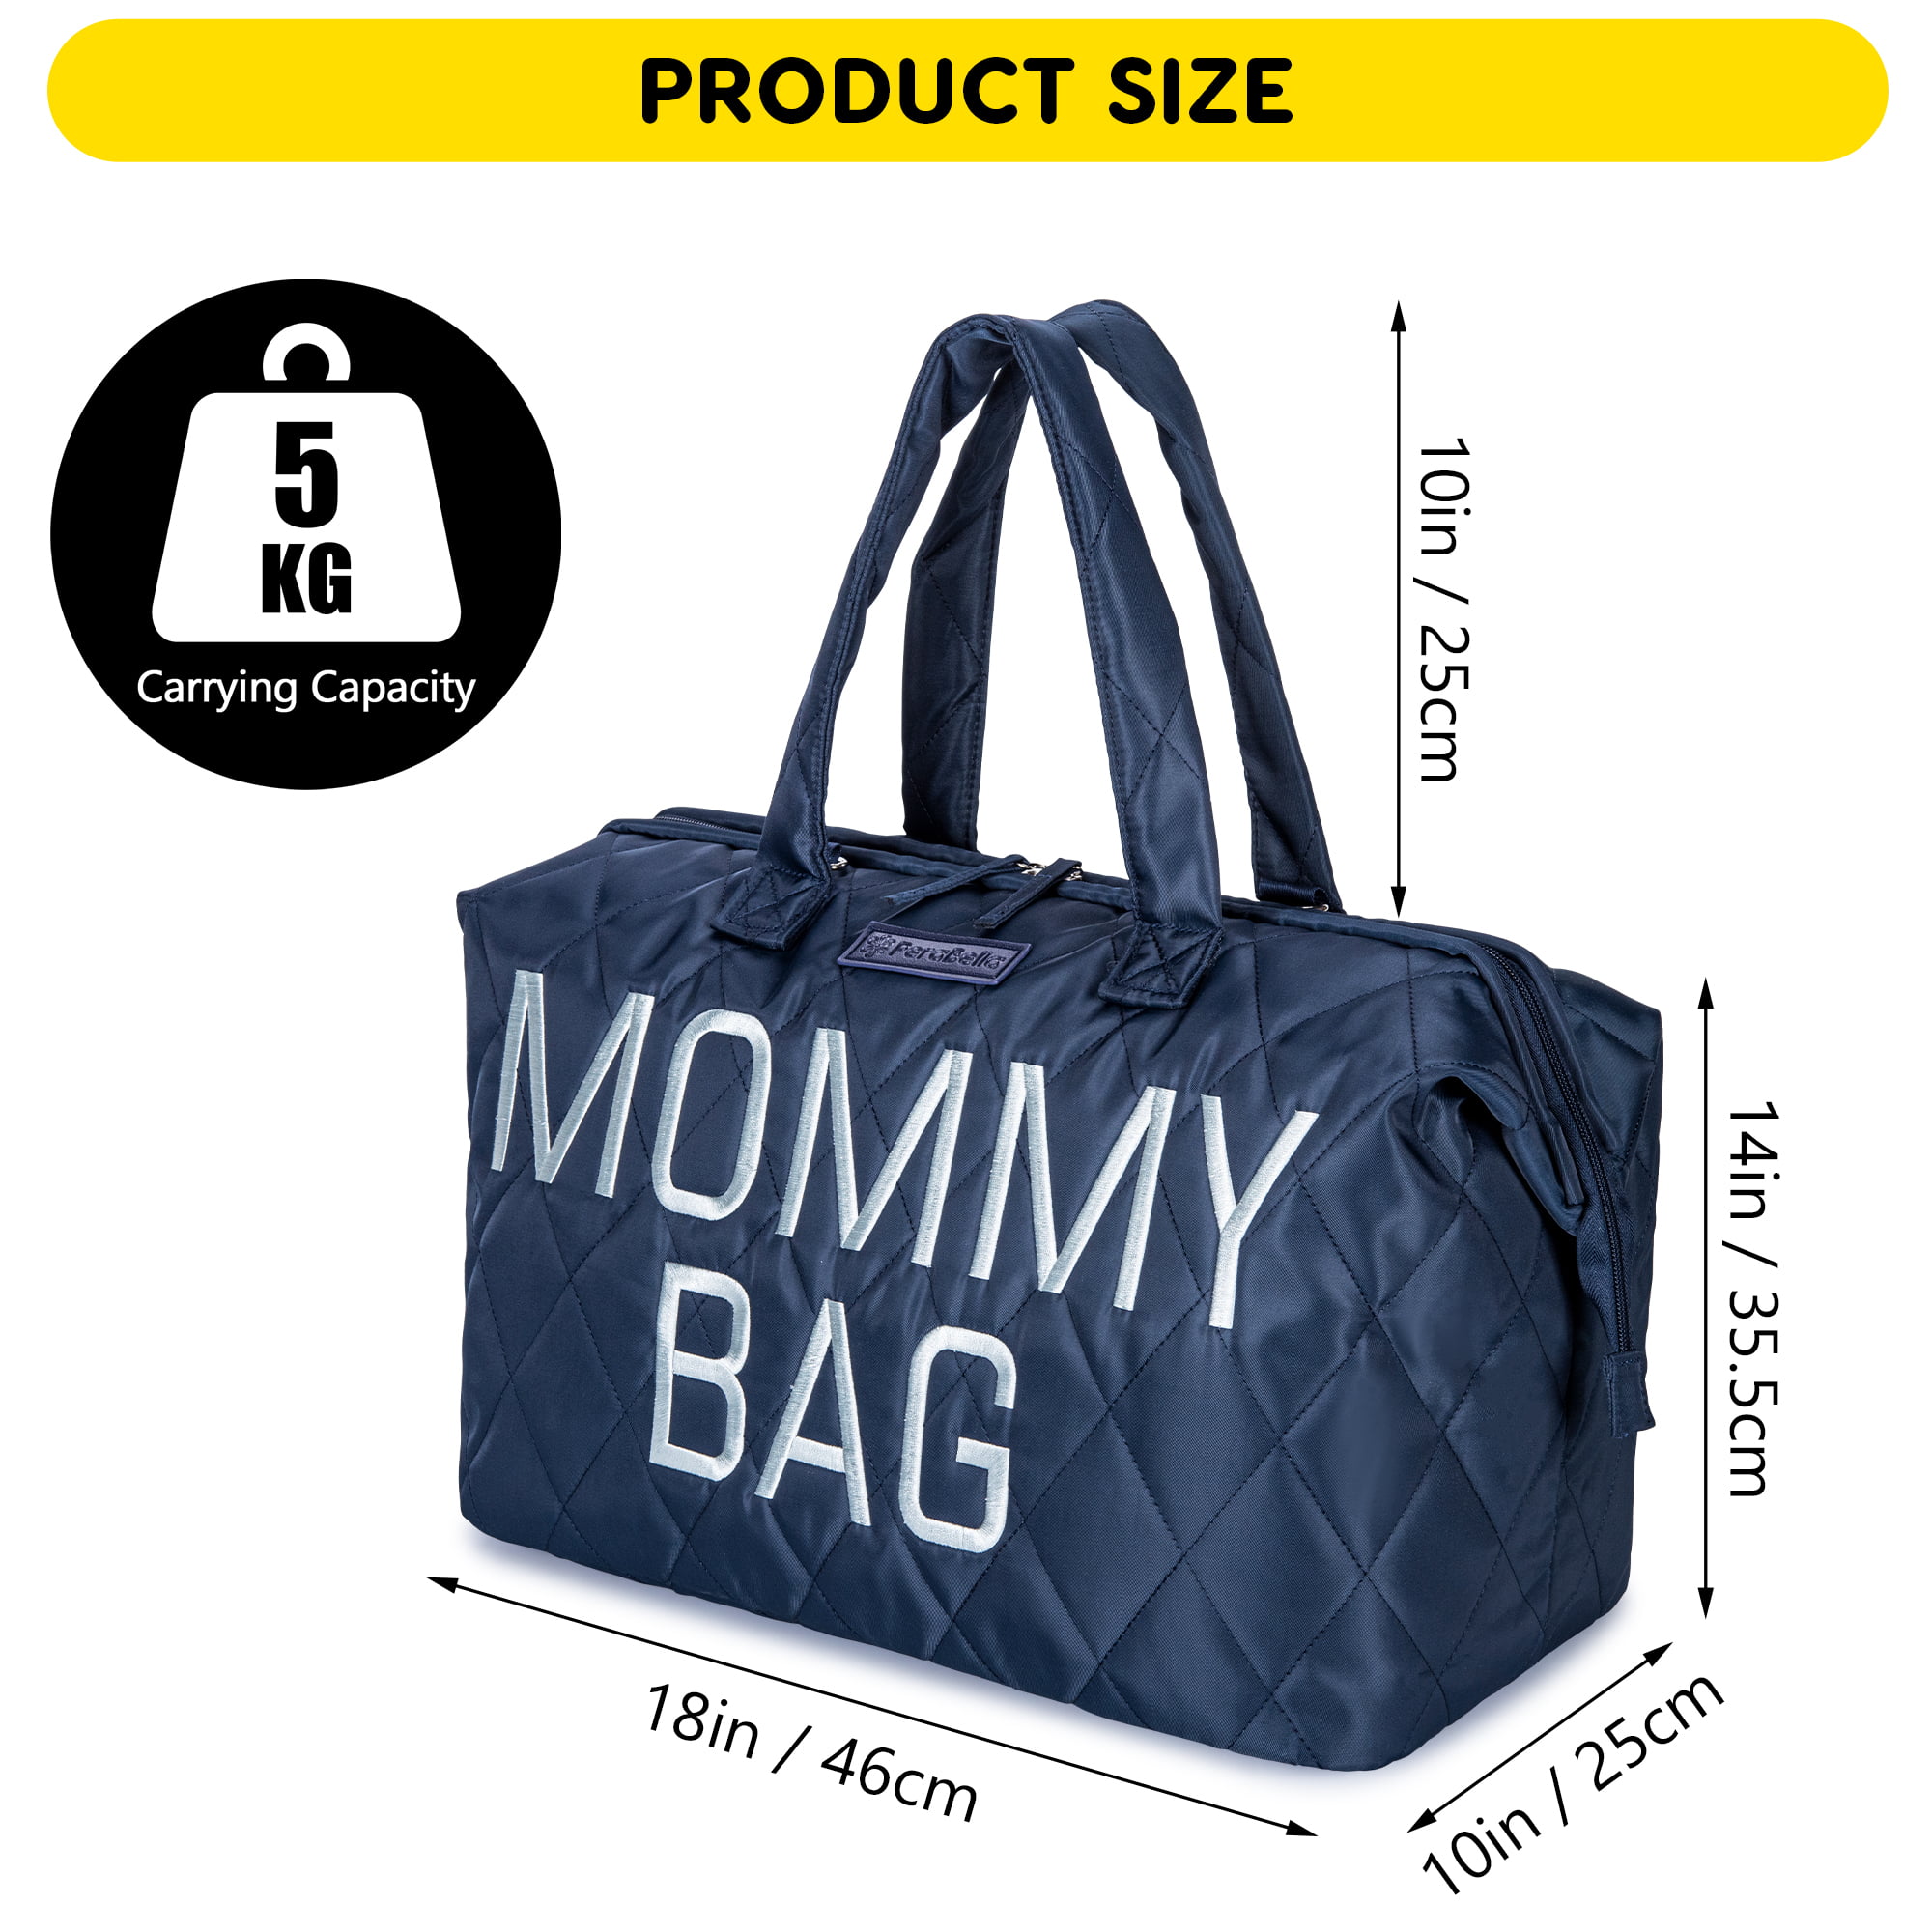  PeraBella Mommy Bag for Hospital, Mom Bag Diaper Bag